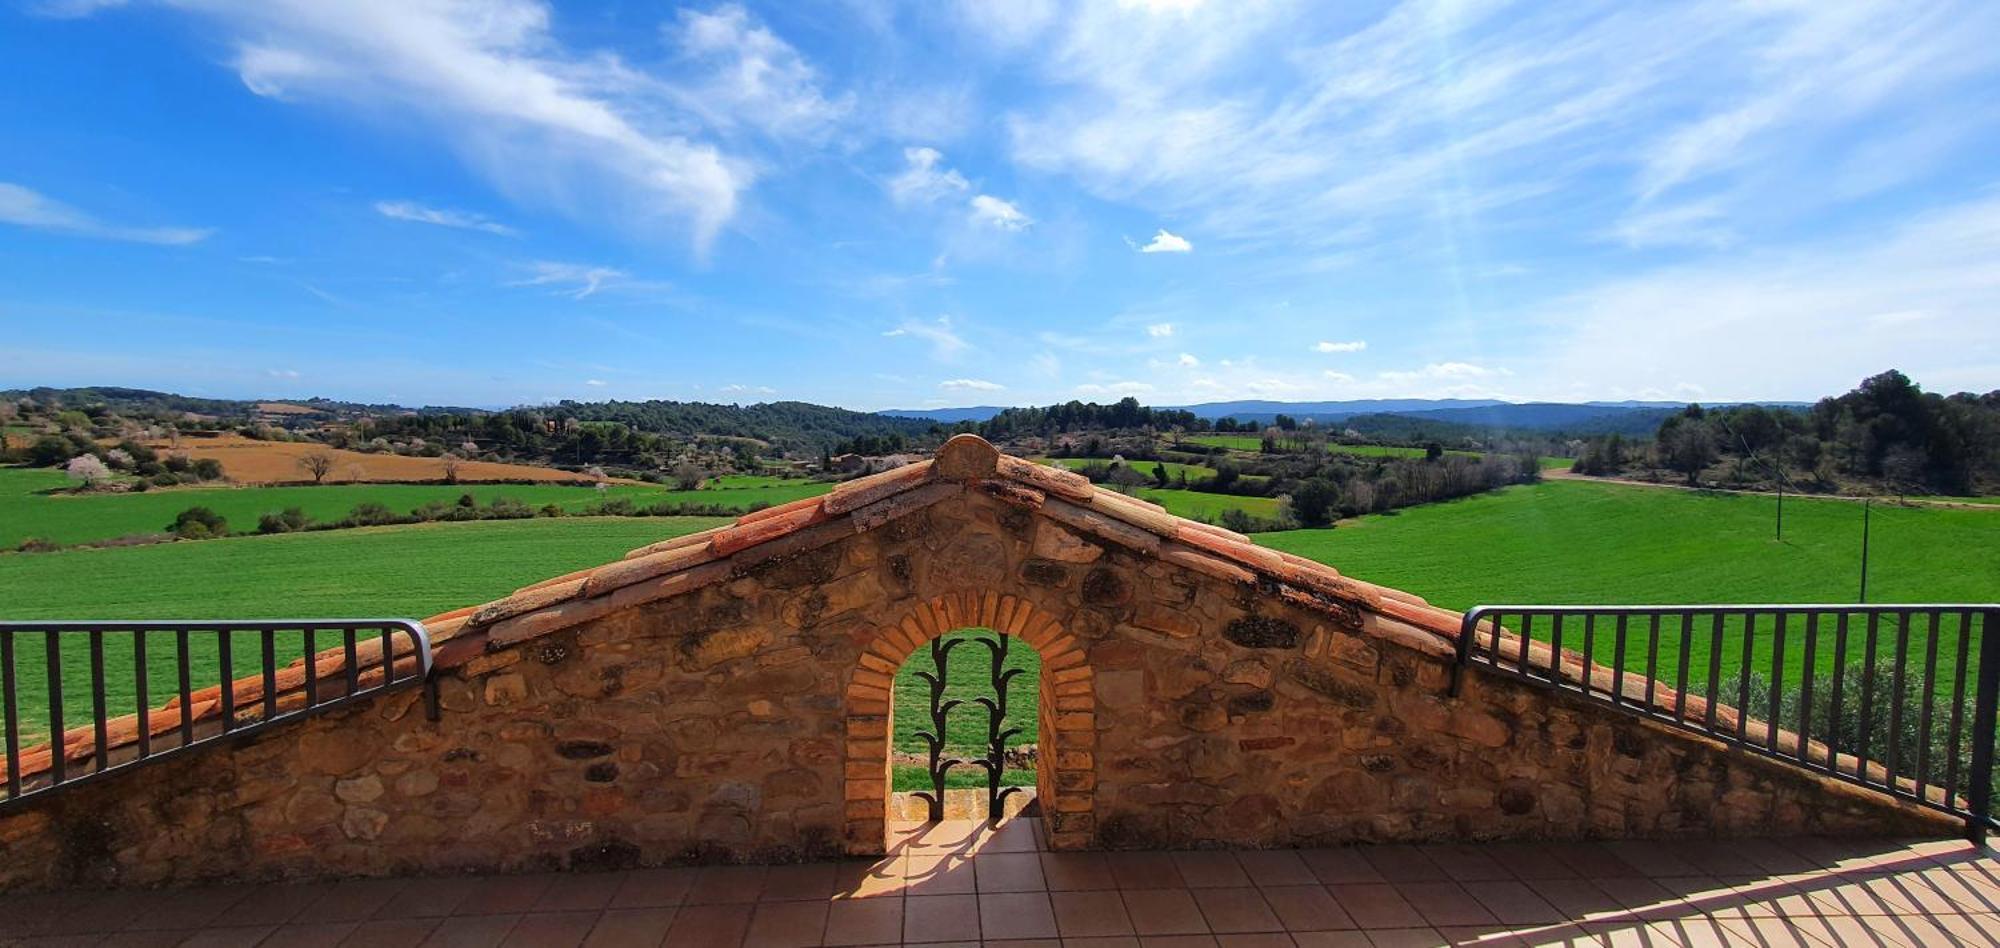 Villa Cal Ganyada, Casa Rural Cardona Extérieur photo